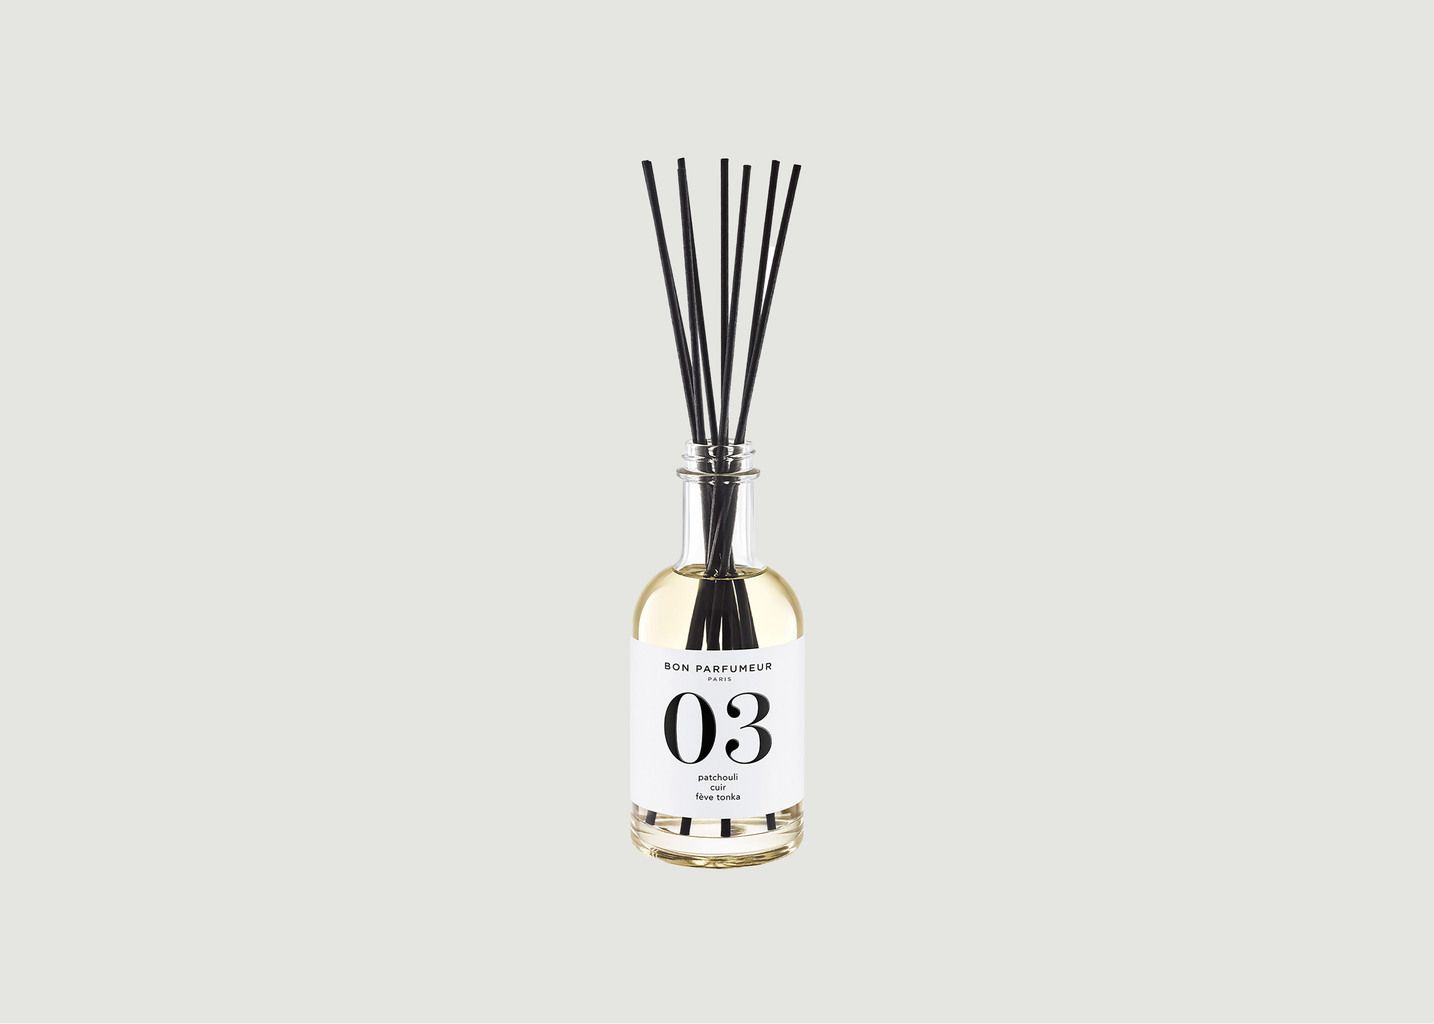 Bon Parfumeur Home Fragrance Diffuser 03: Patchouli, Leather, Tonka Bean